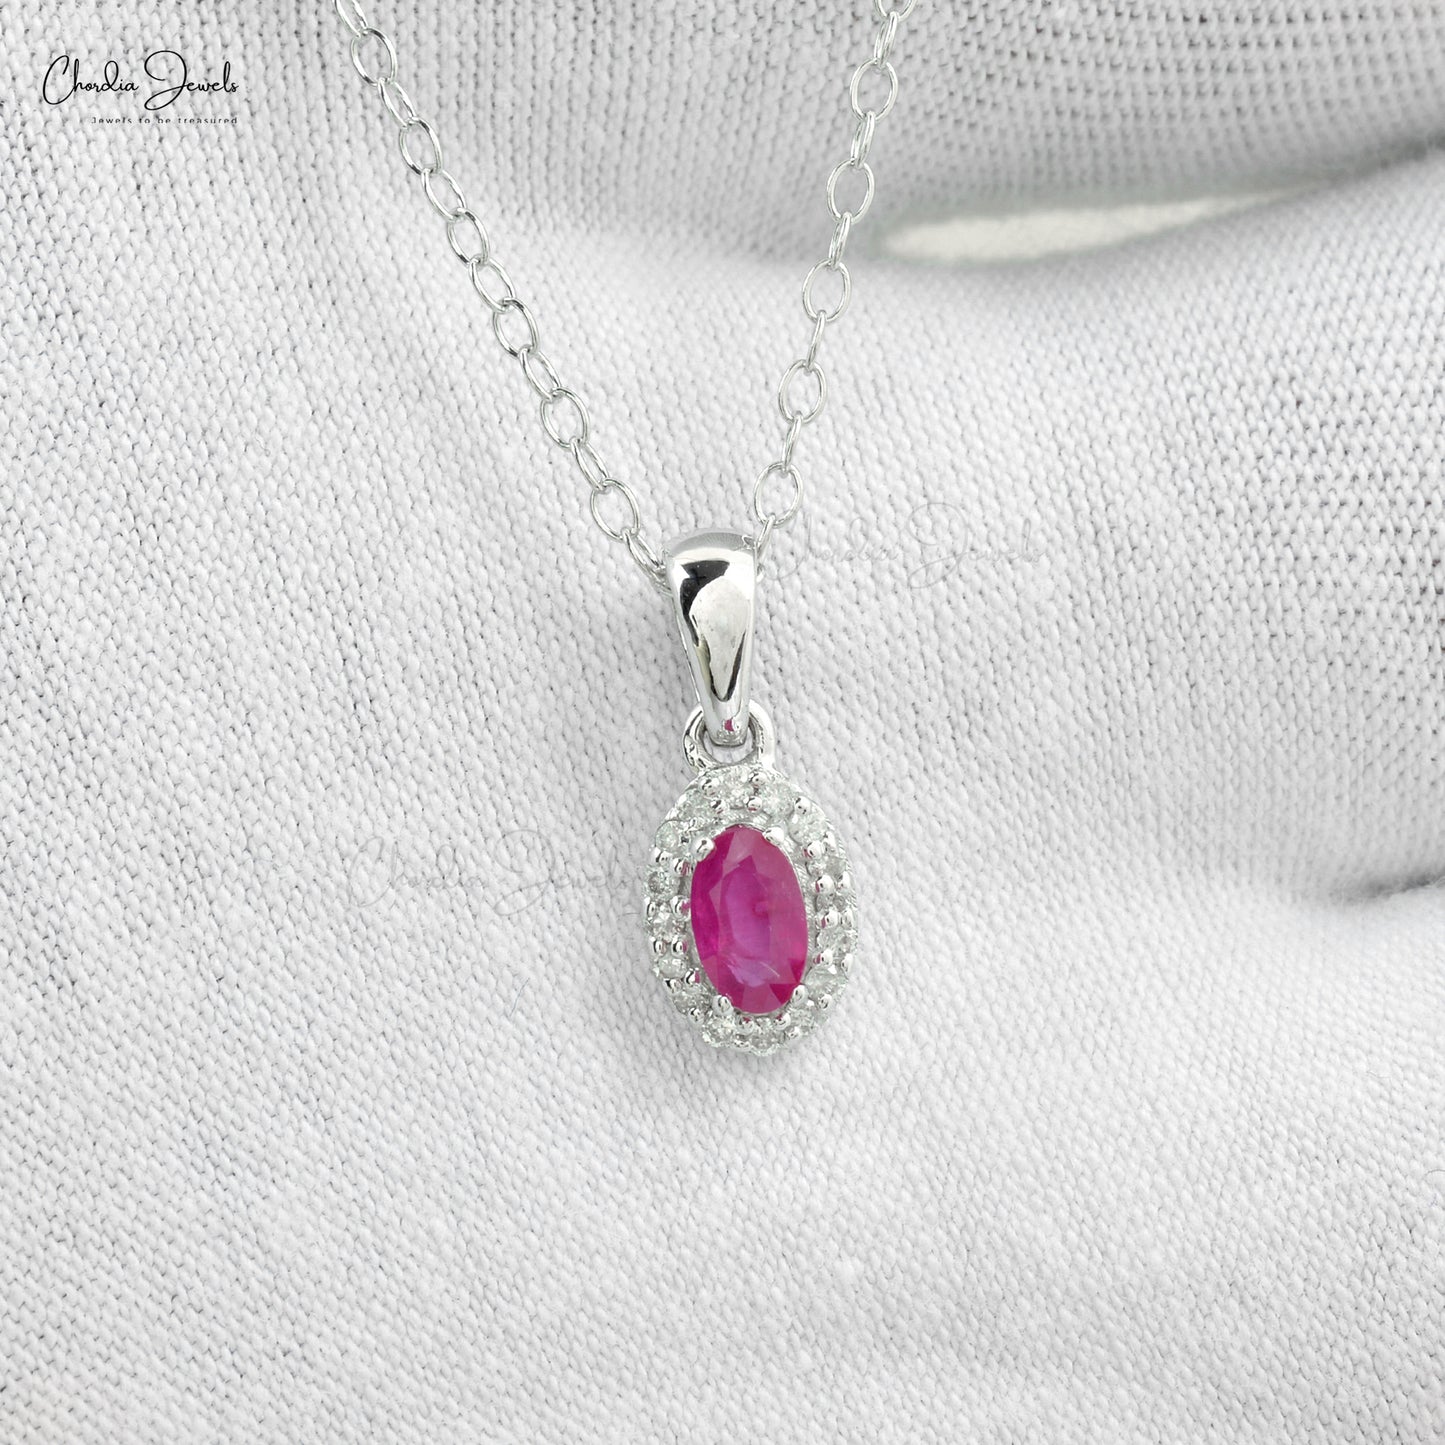 Minimalist Natural Diamond Halo Pendant 14k Real White Gold Dainty Necklace Pendant Genuine Red Ruby Gemstone Jewelry Bridesmaid Gift